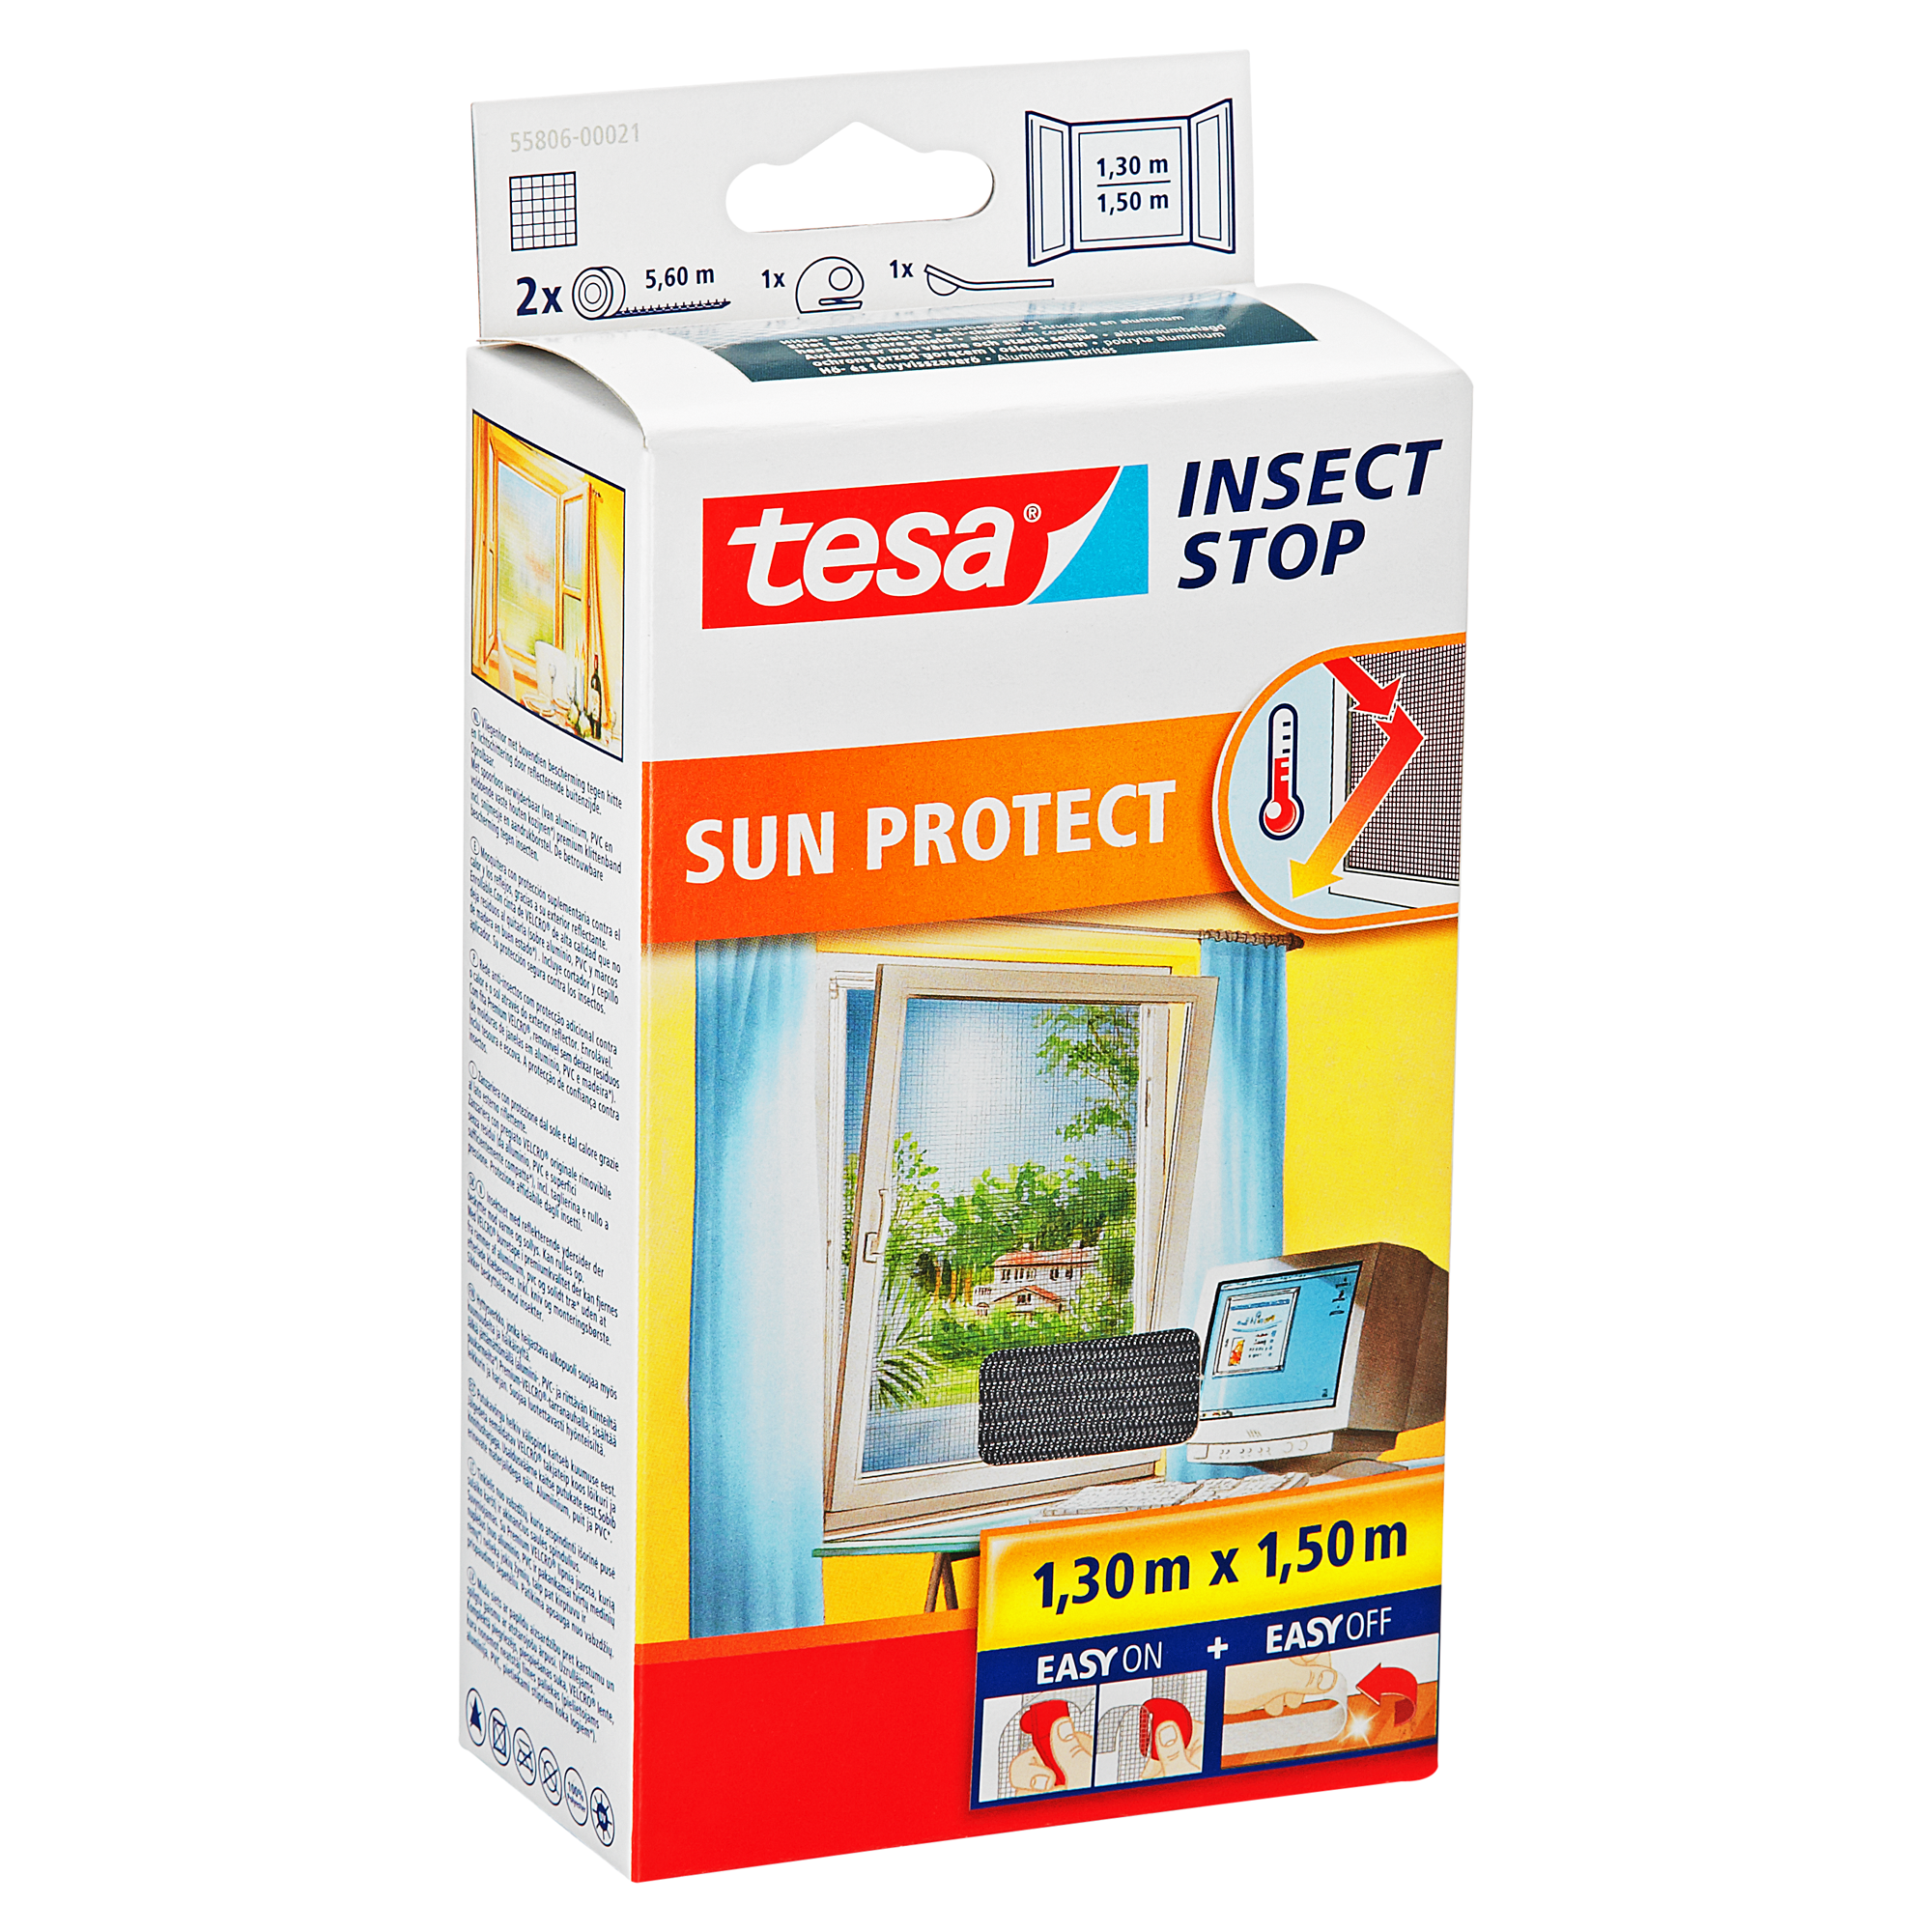 & Insektenschutz mit Blend tesa Insect Stop SUN PROTECT Fliegengitter Fenster